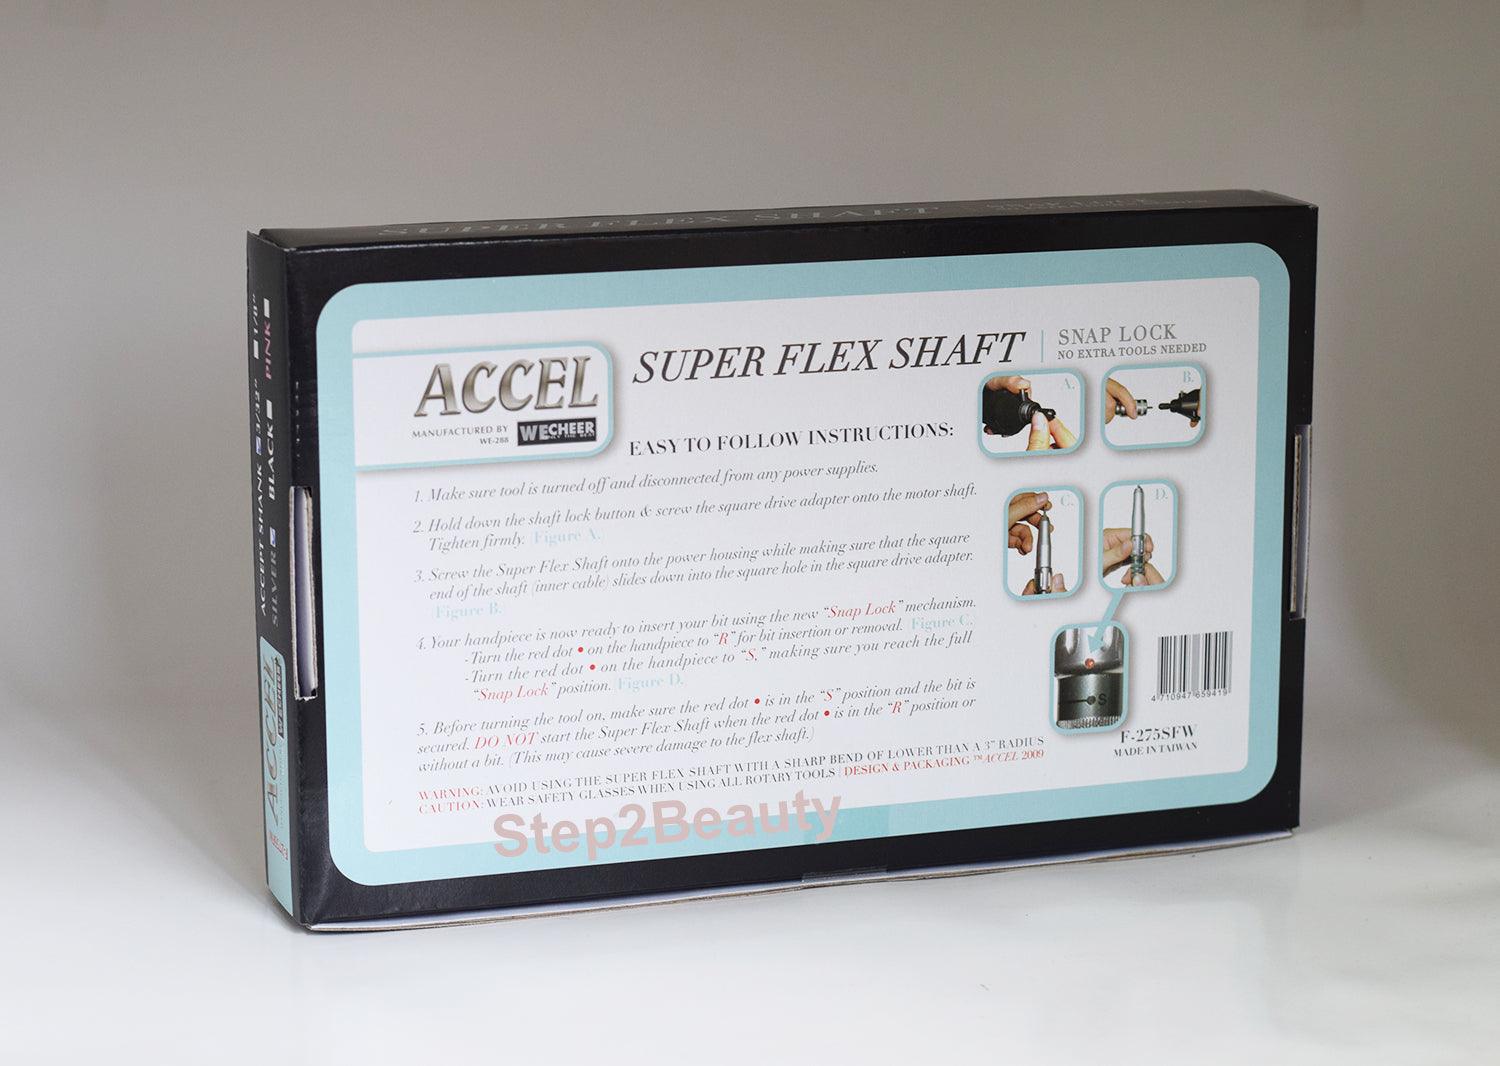 ACCEL Super Flex Shaft 3/32" Shank Snap Lock - Silver